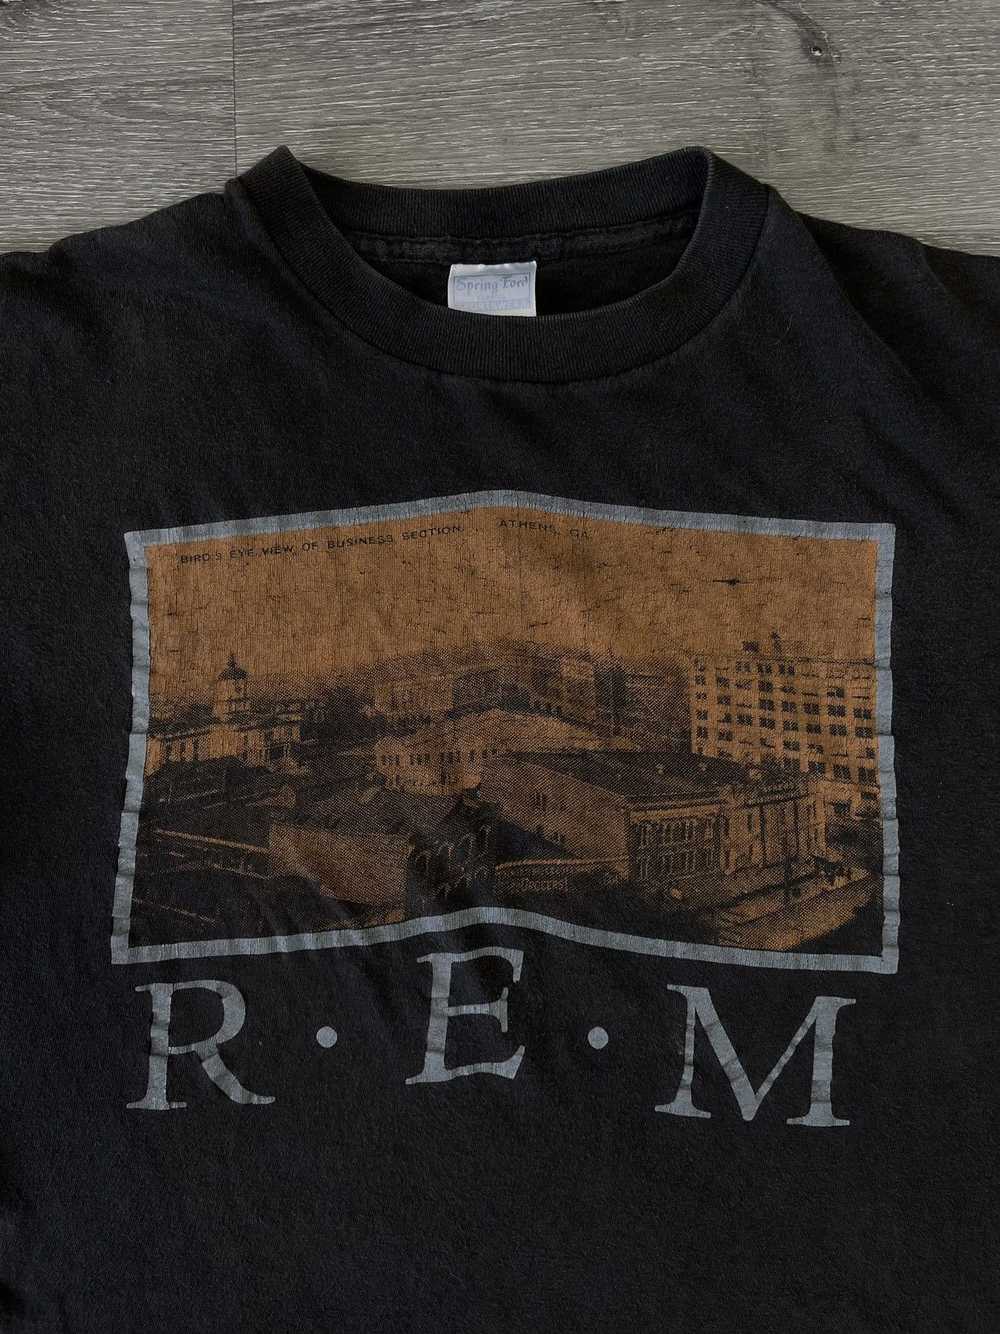 Vintage REM Bird's Eye View 1986 T-Shirt - image 3